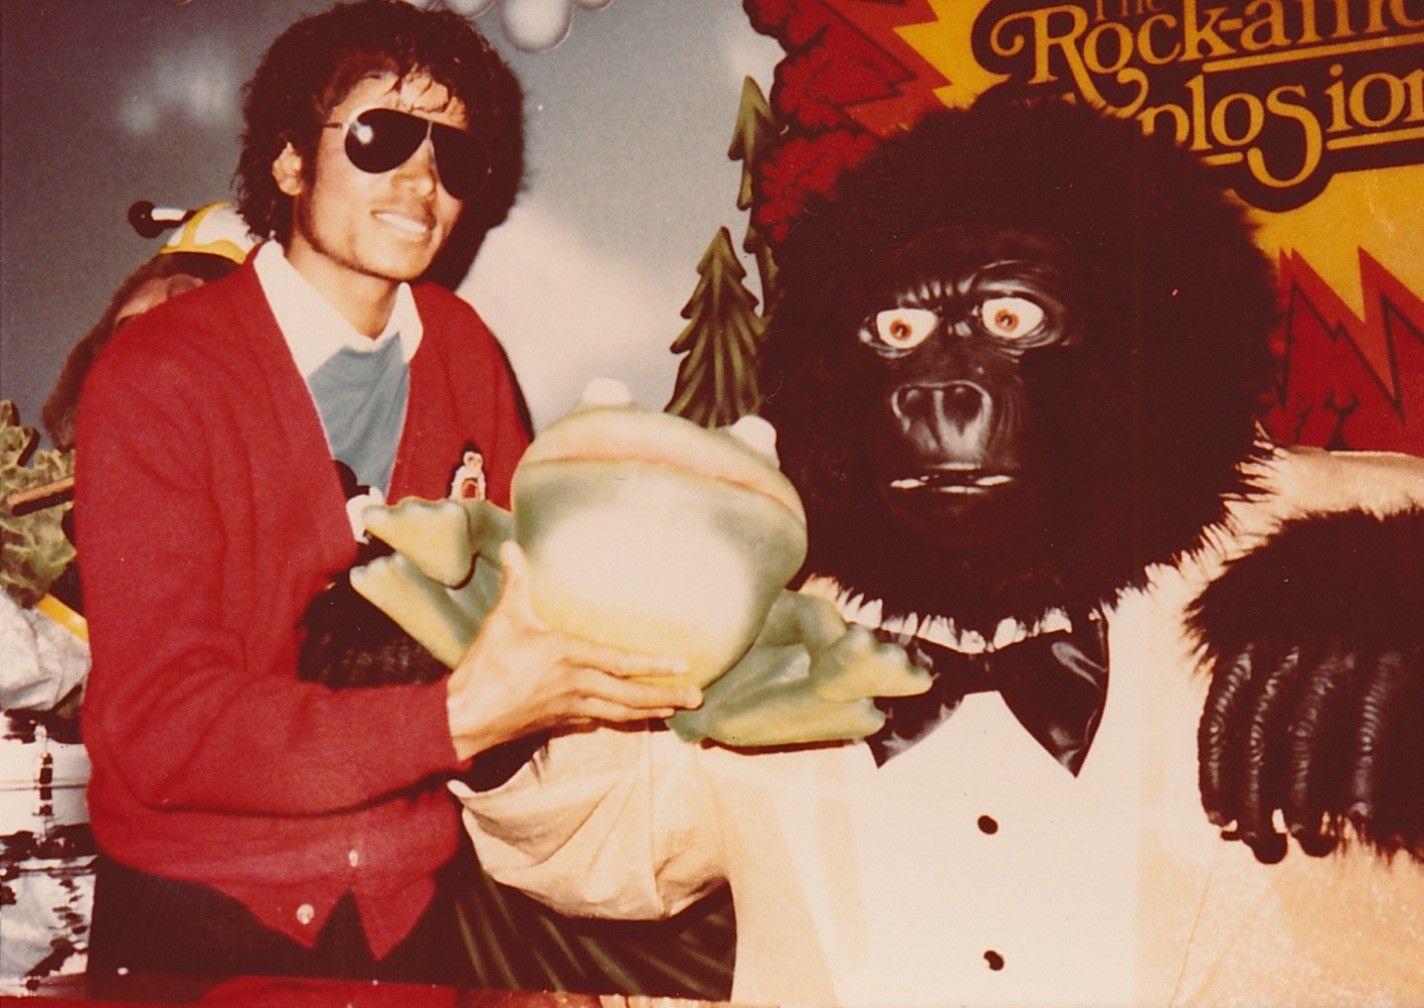 Michael Jackson holding the rockafire frog prop next to fatz.